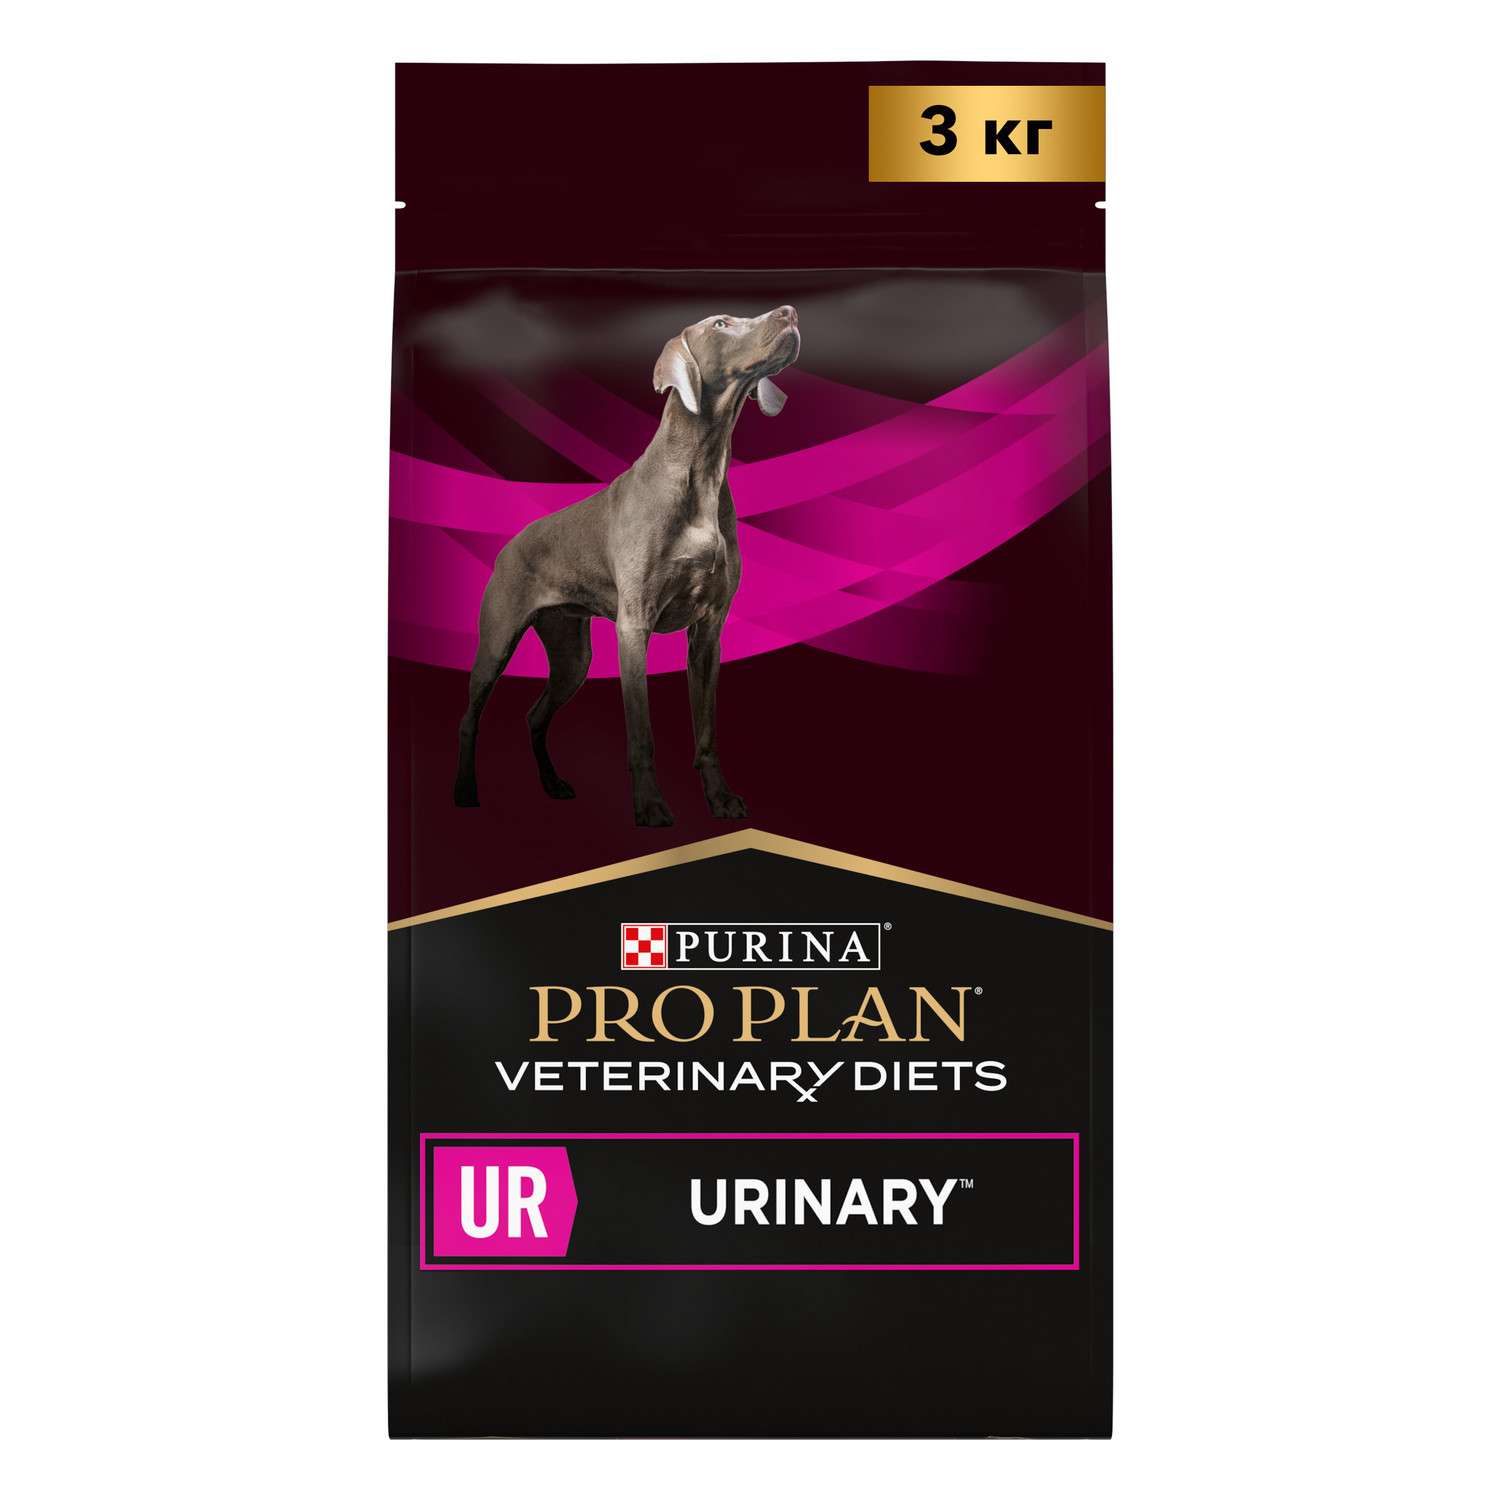 Корм для собак Purina Pro Plan Veterinary diets UR при МКБ 3кг - фото 1